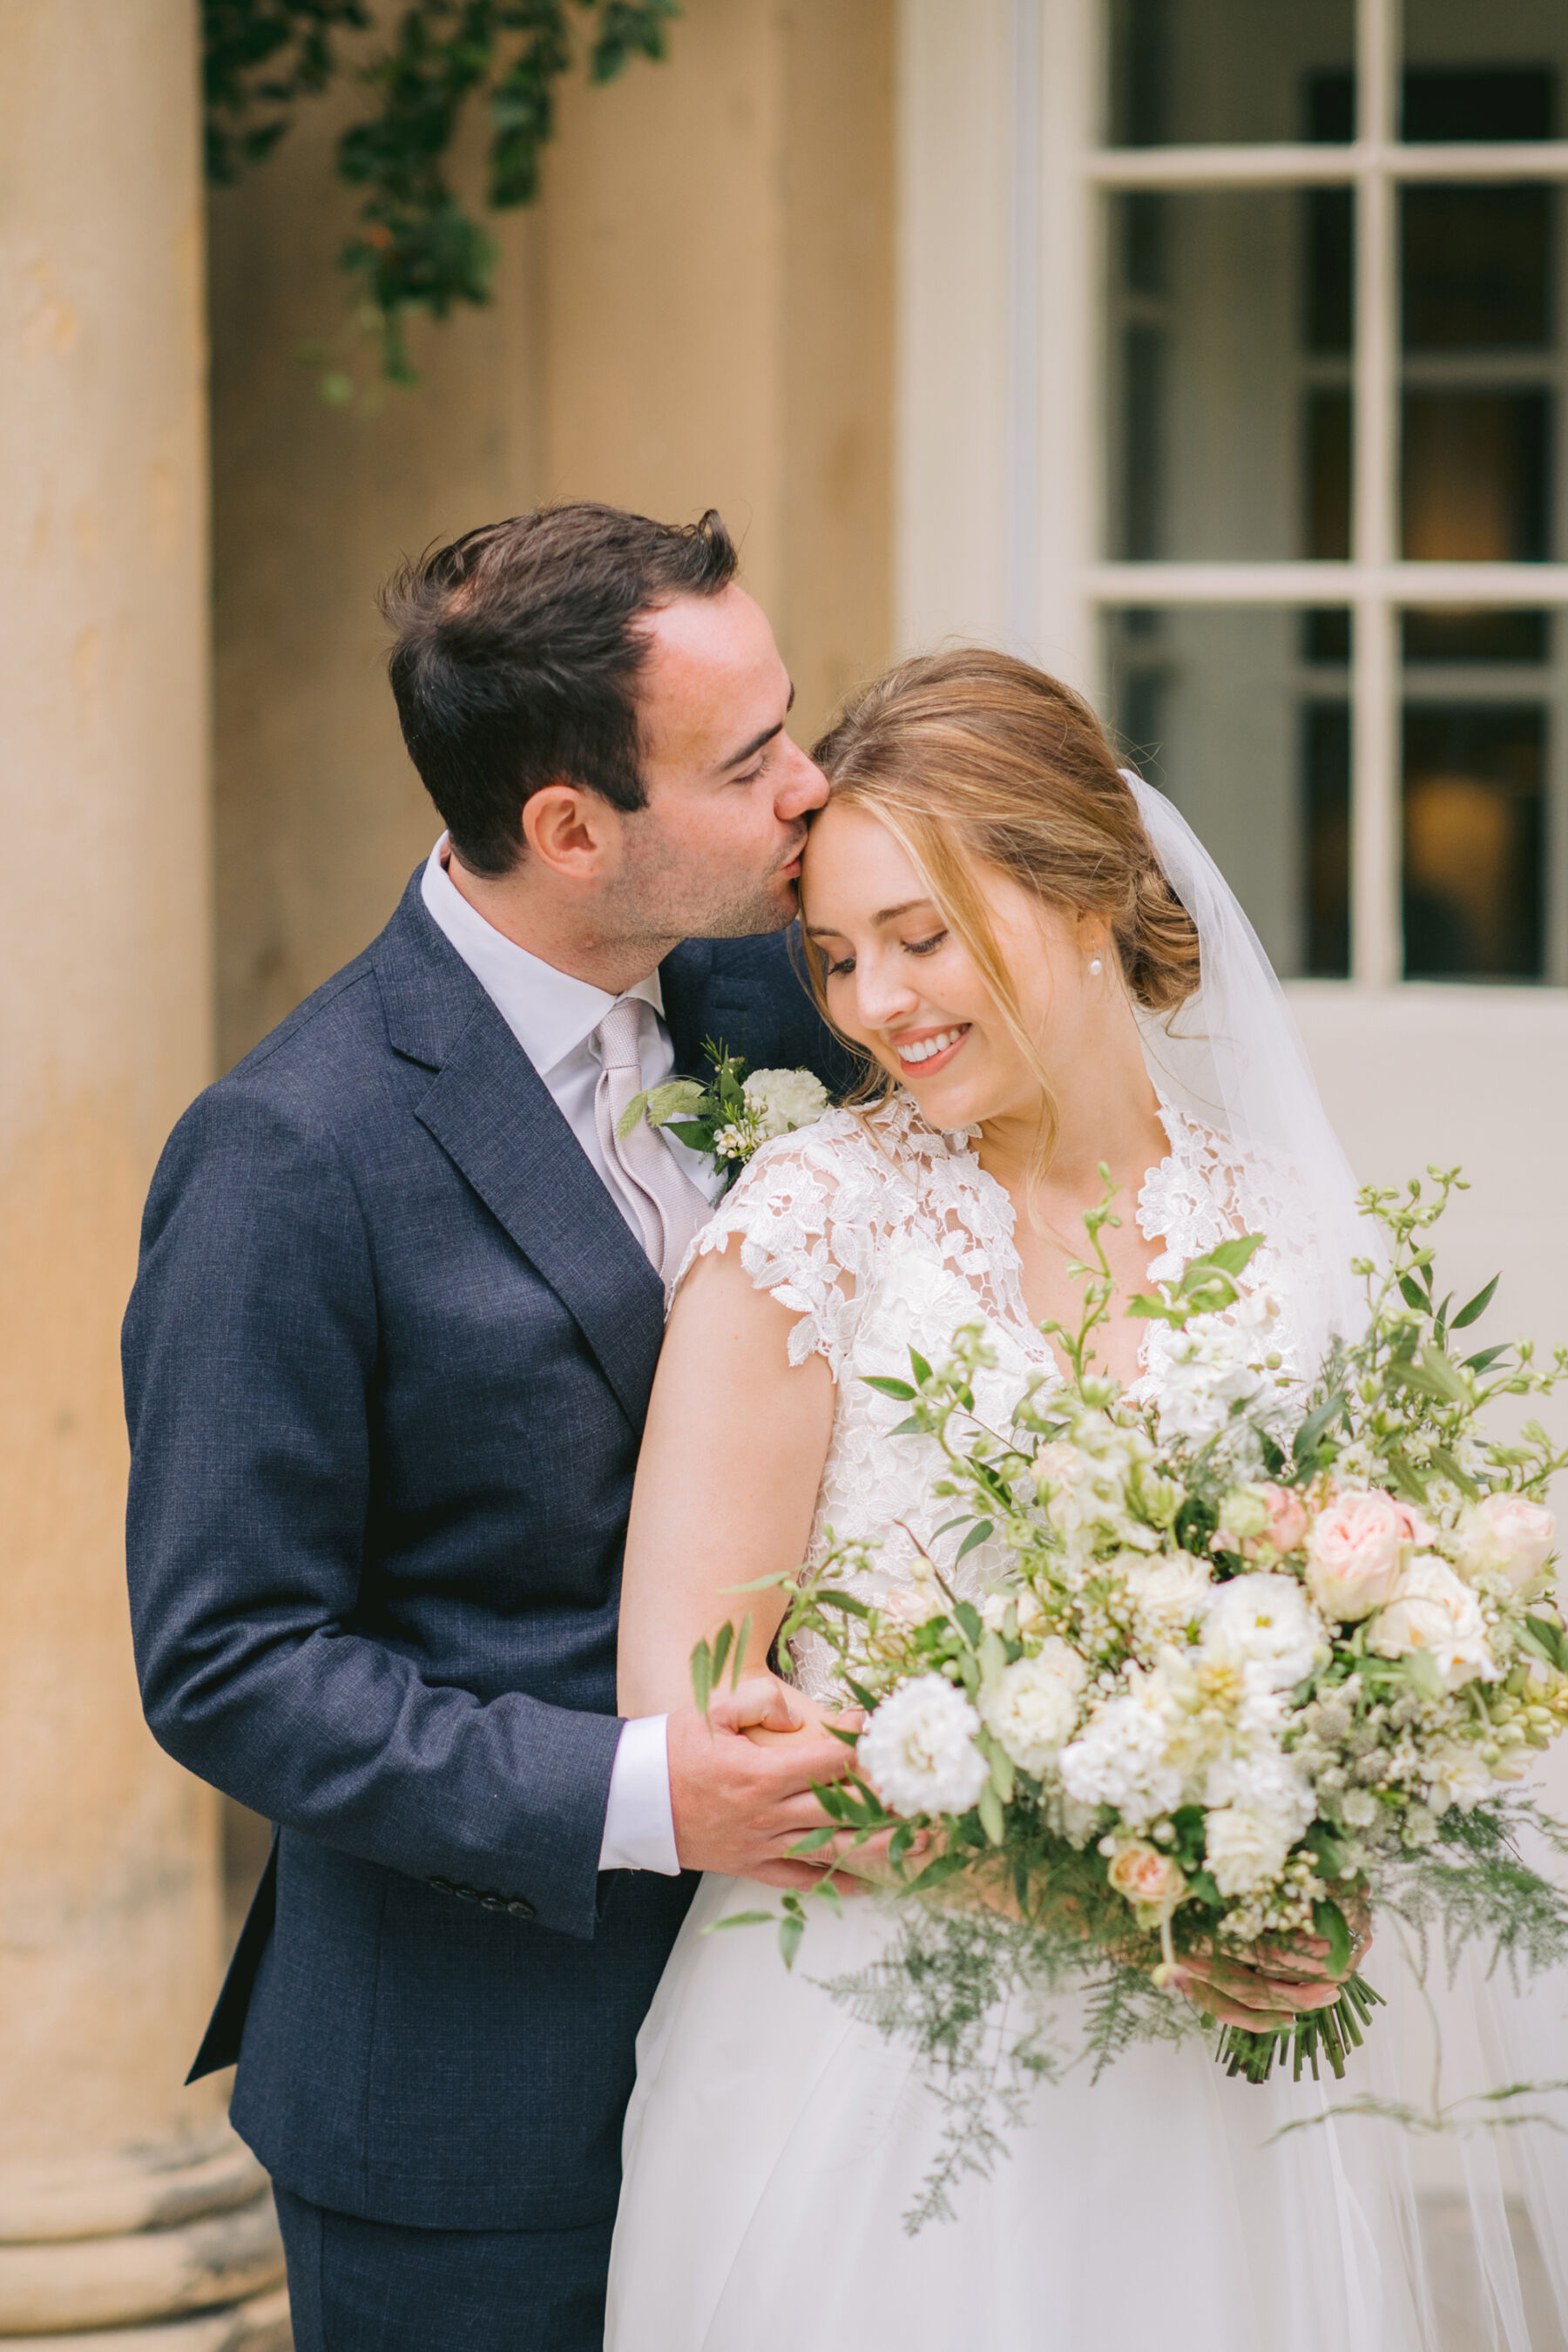 Groom kissing his bride in Caroline Castigliano wedding dress, carrying a beautiful seasonal summer wedding flowers bouquet.